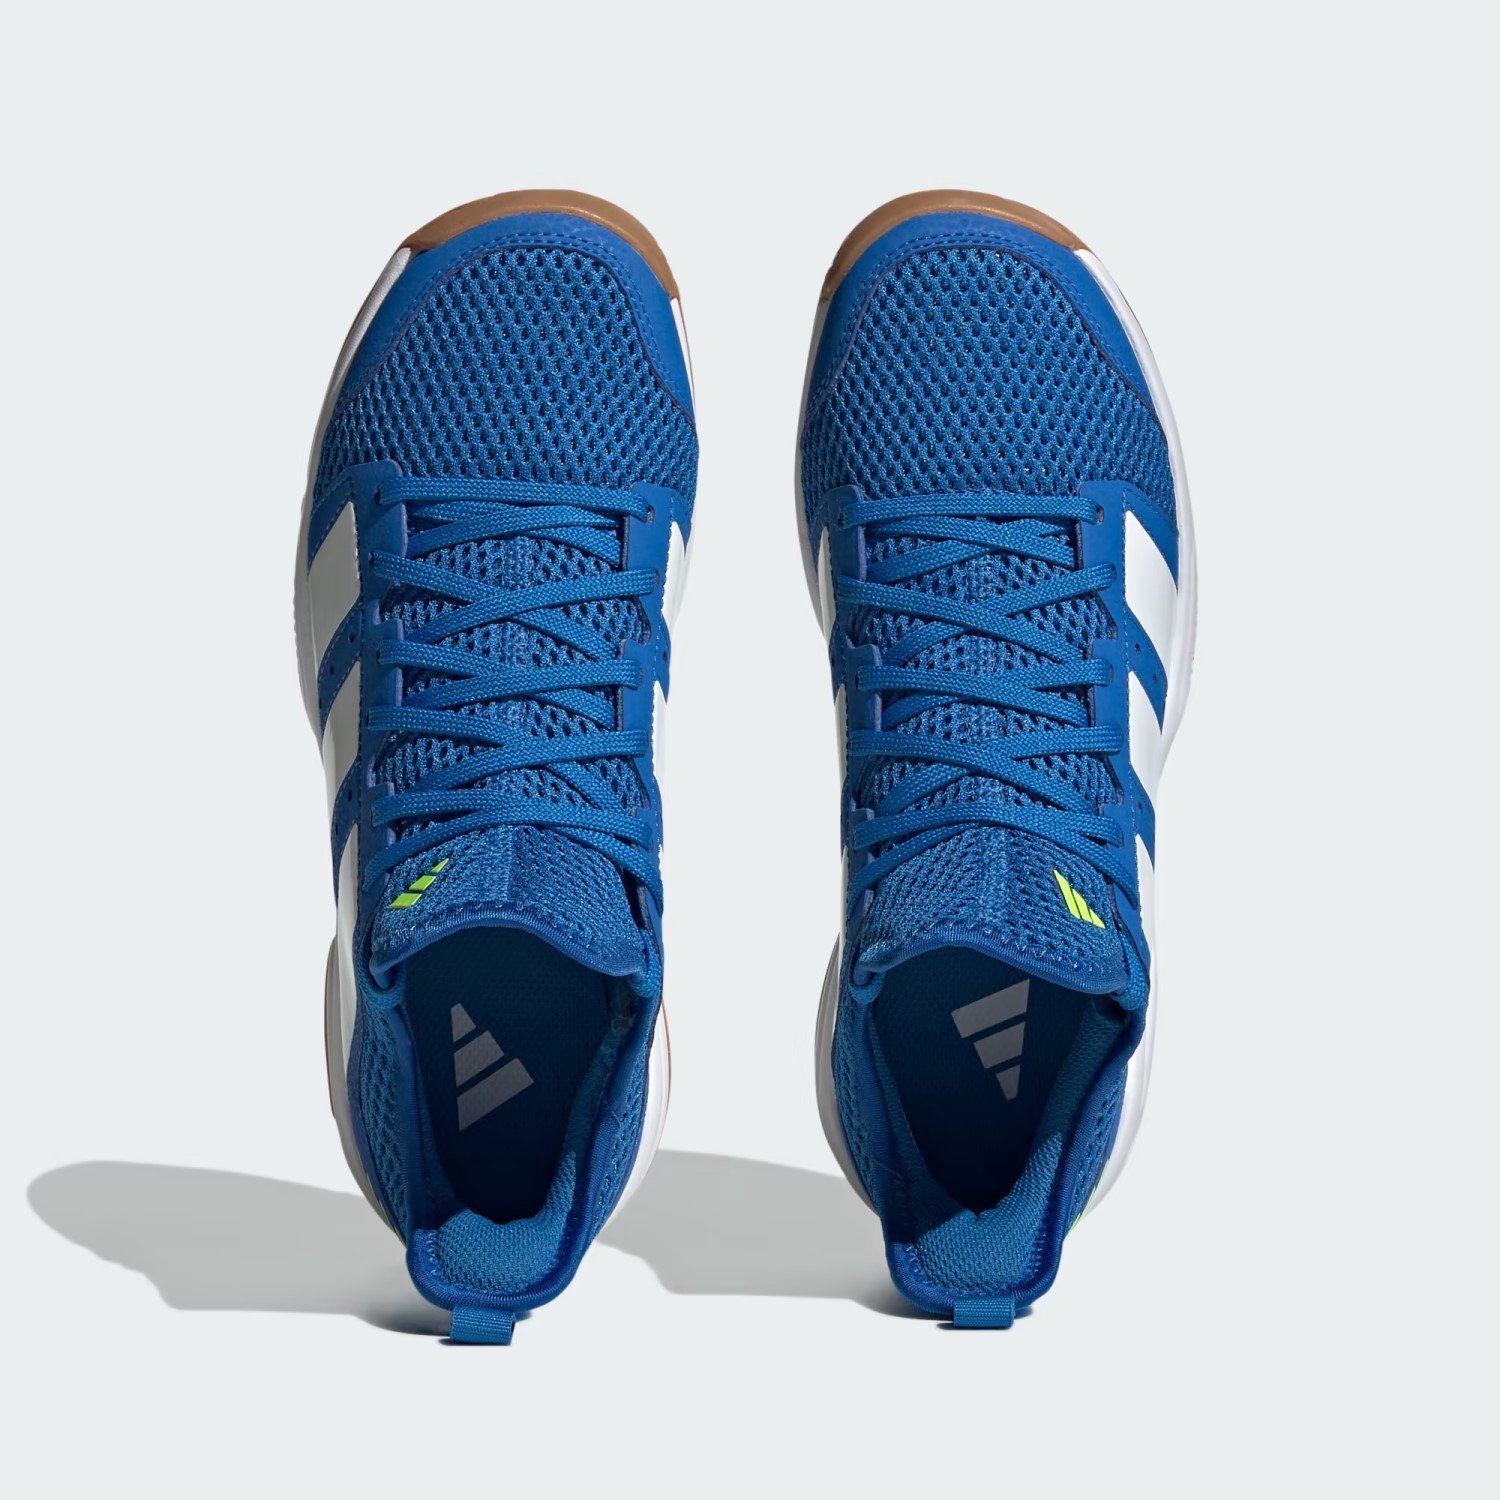 Obuv Adidas Stabil J - modrá/biela/zelená